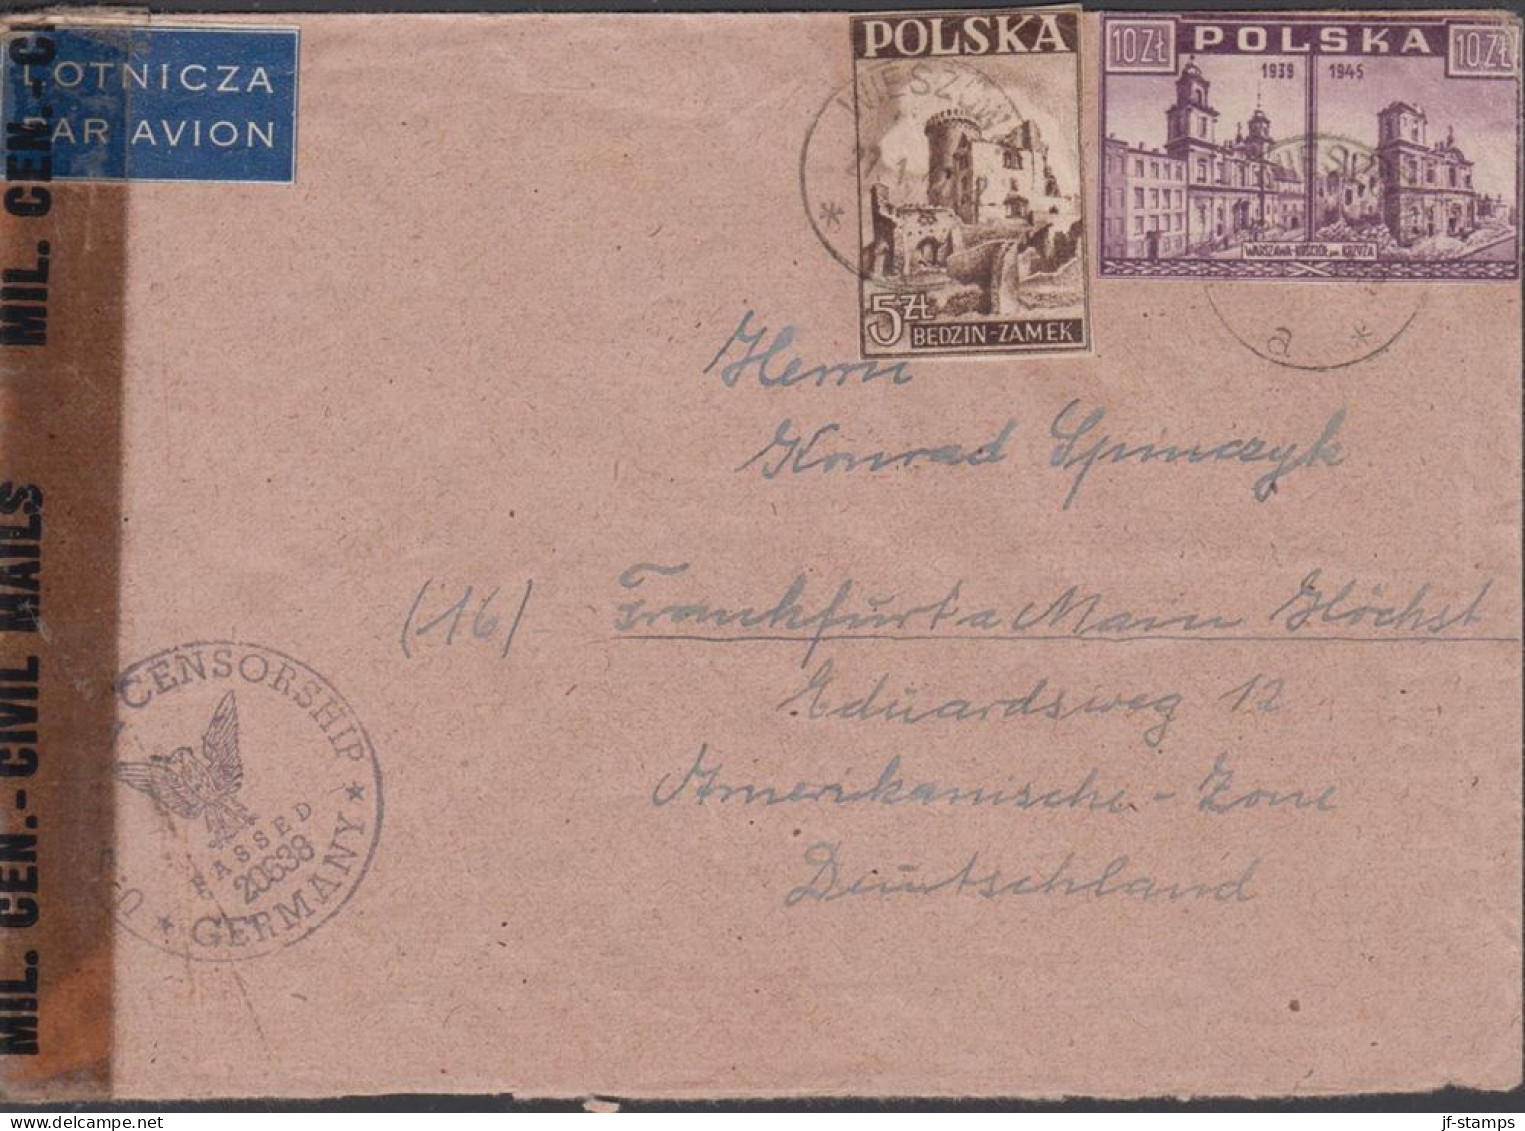 1947. POLSKA. 10 Zl. WARSZAWA + ZL 5 On Censored Cover To Germany Cancelled WIESZOW 27. 1. 4... (Michel 419+) - JF438546 - Gouvernement De Londres (exil)